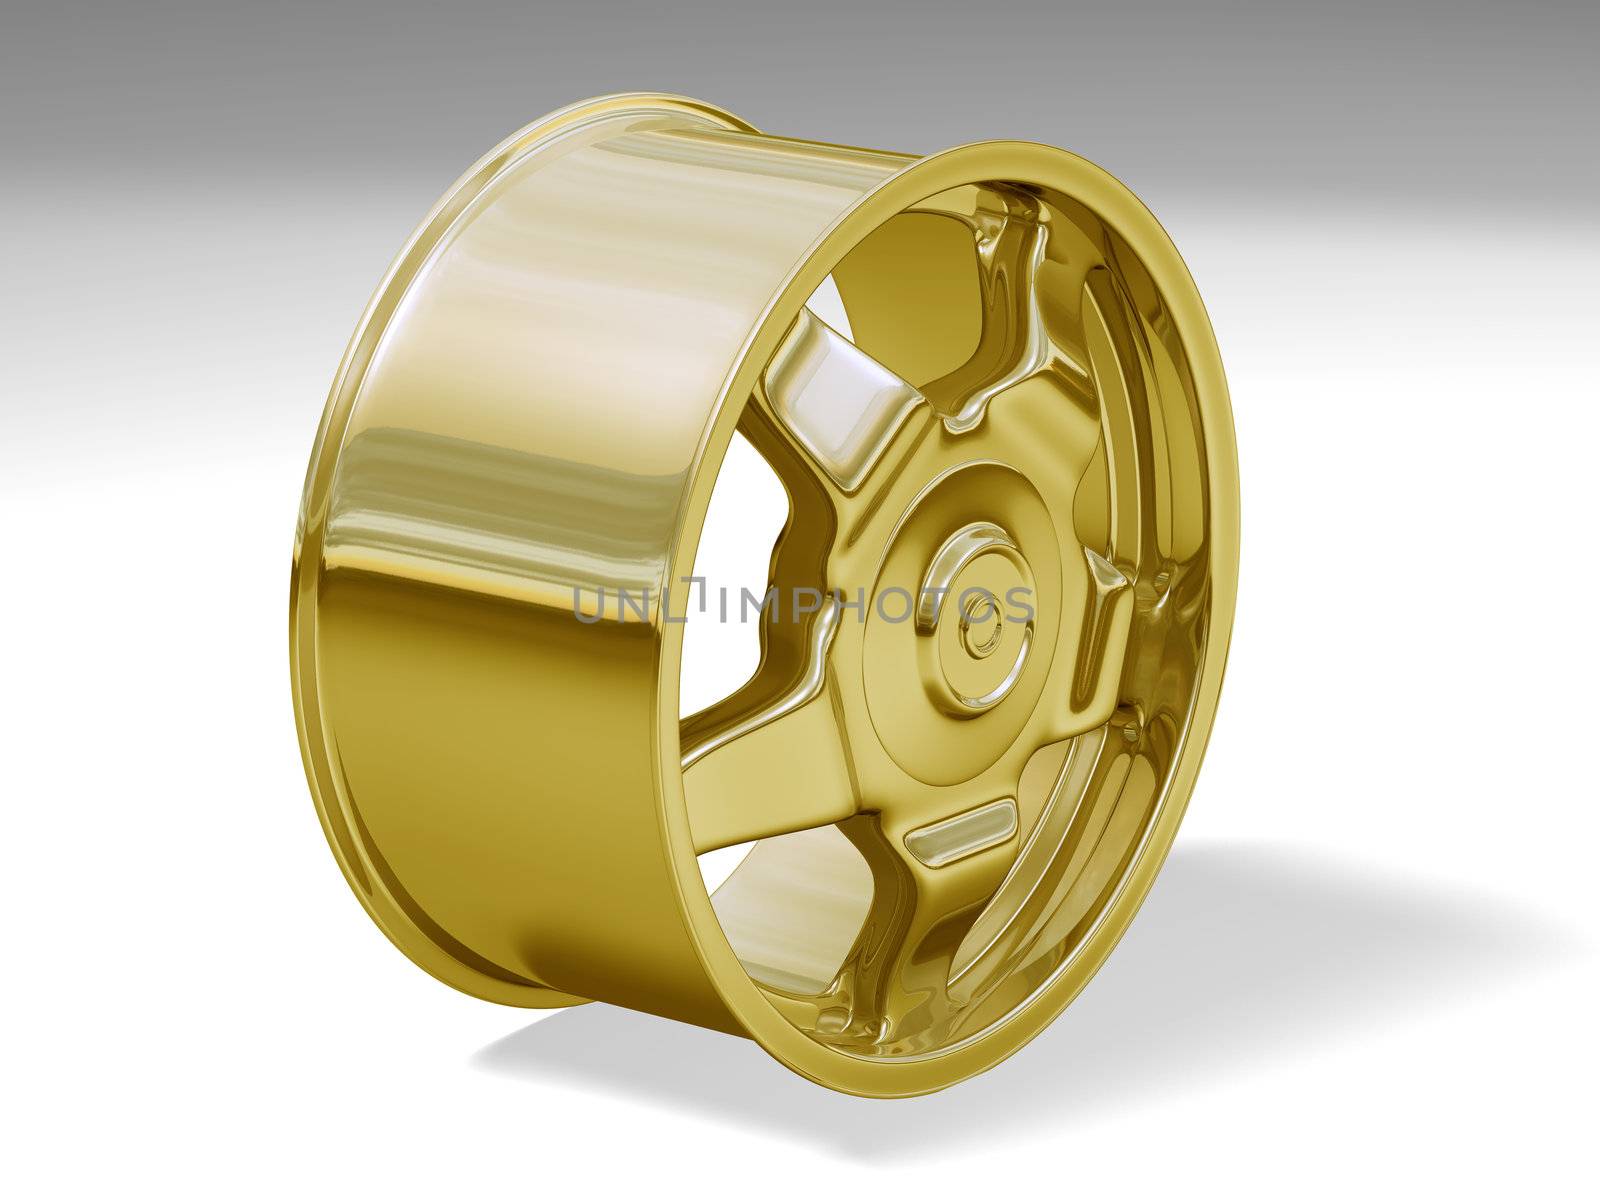 One big golden sport alloy wheel on a white floor